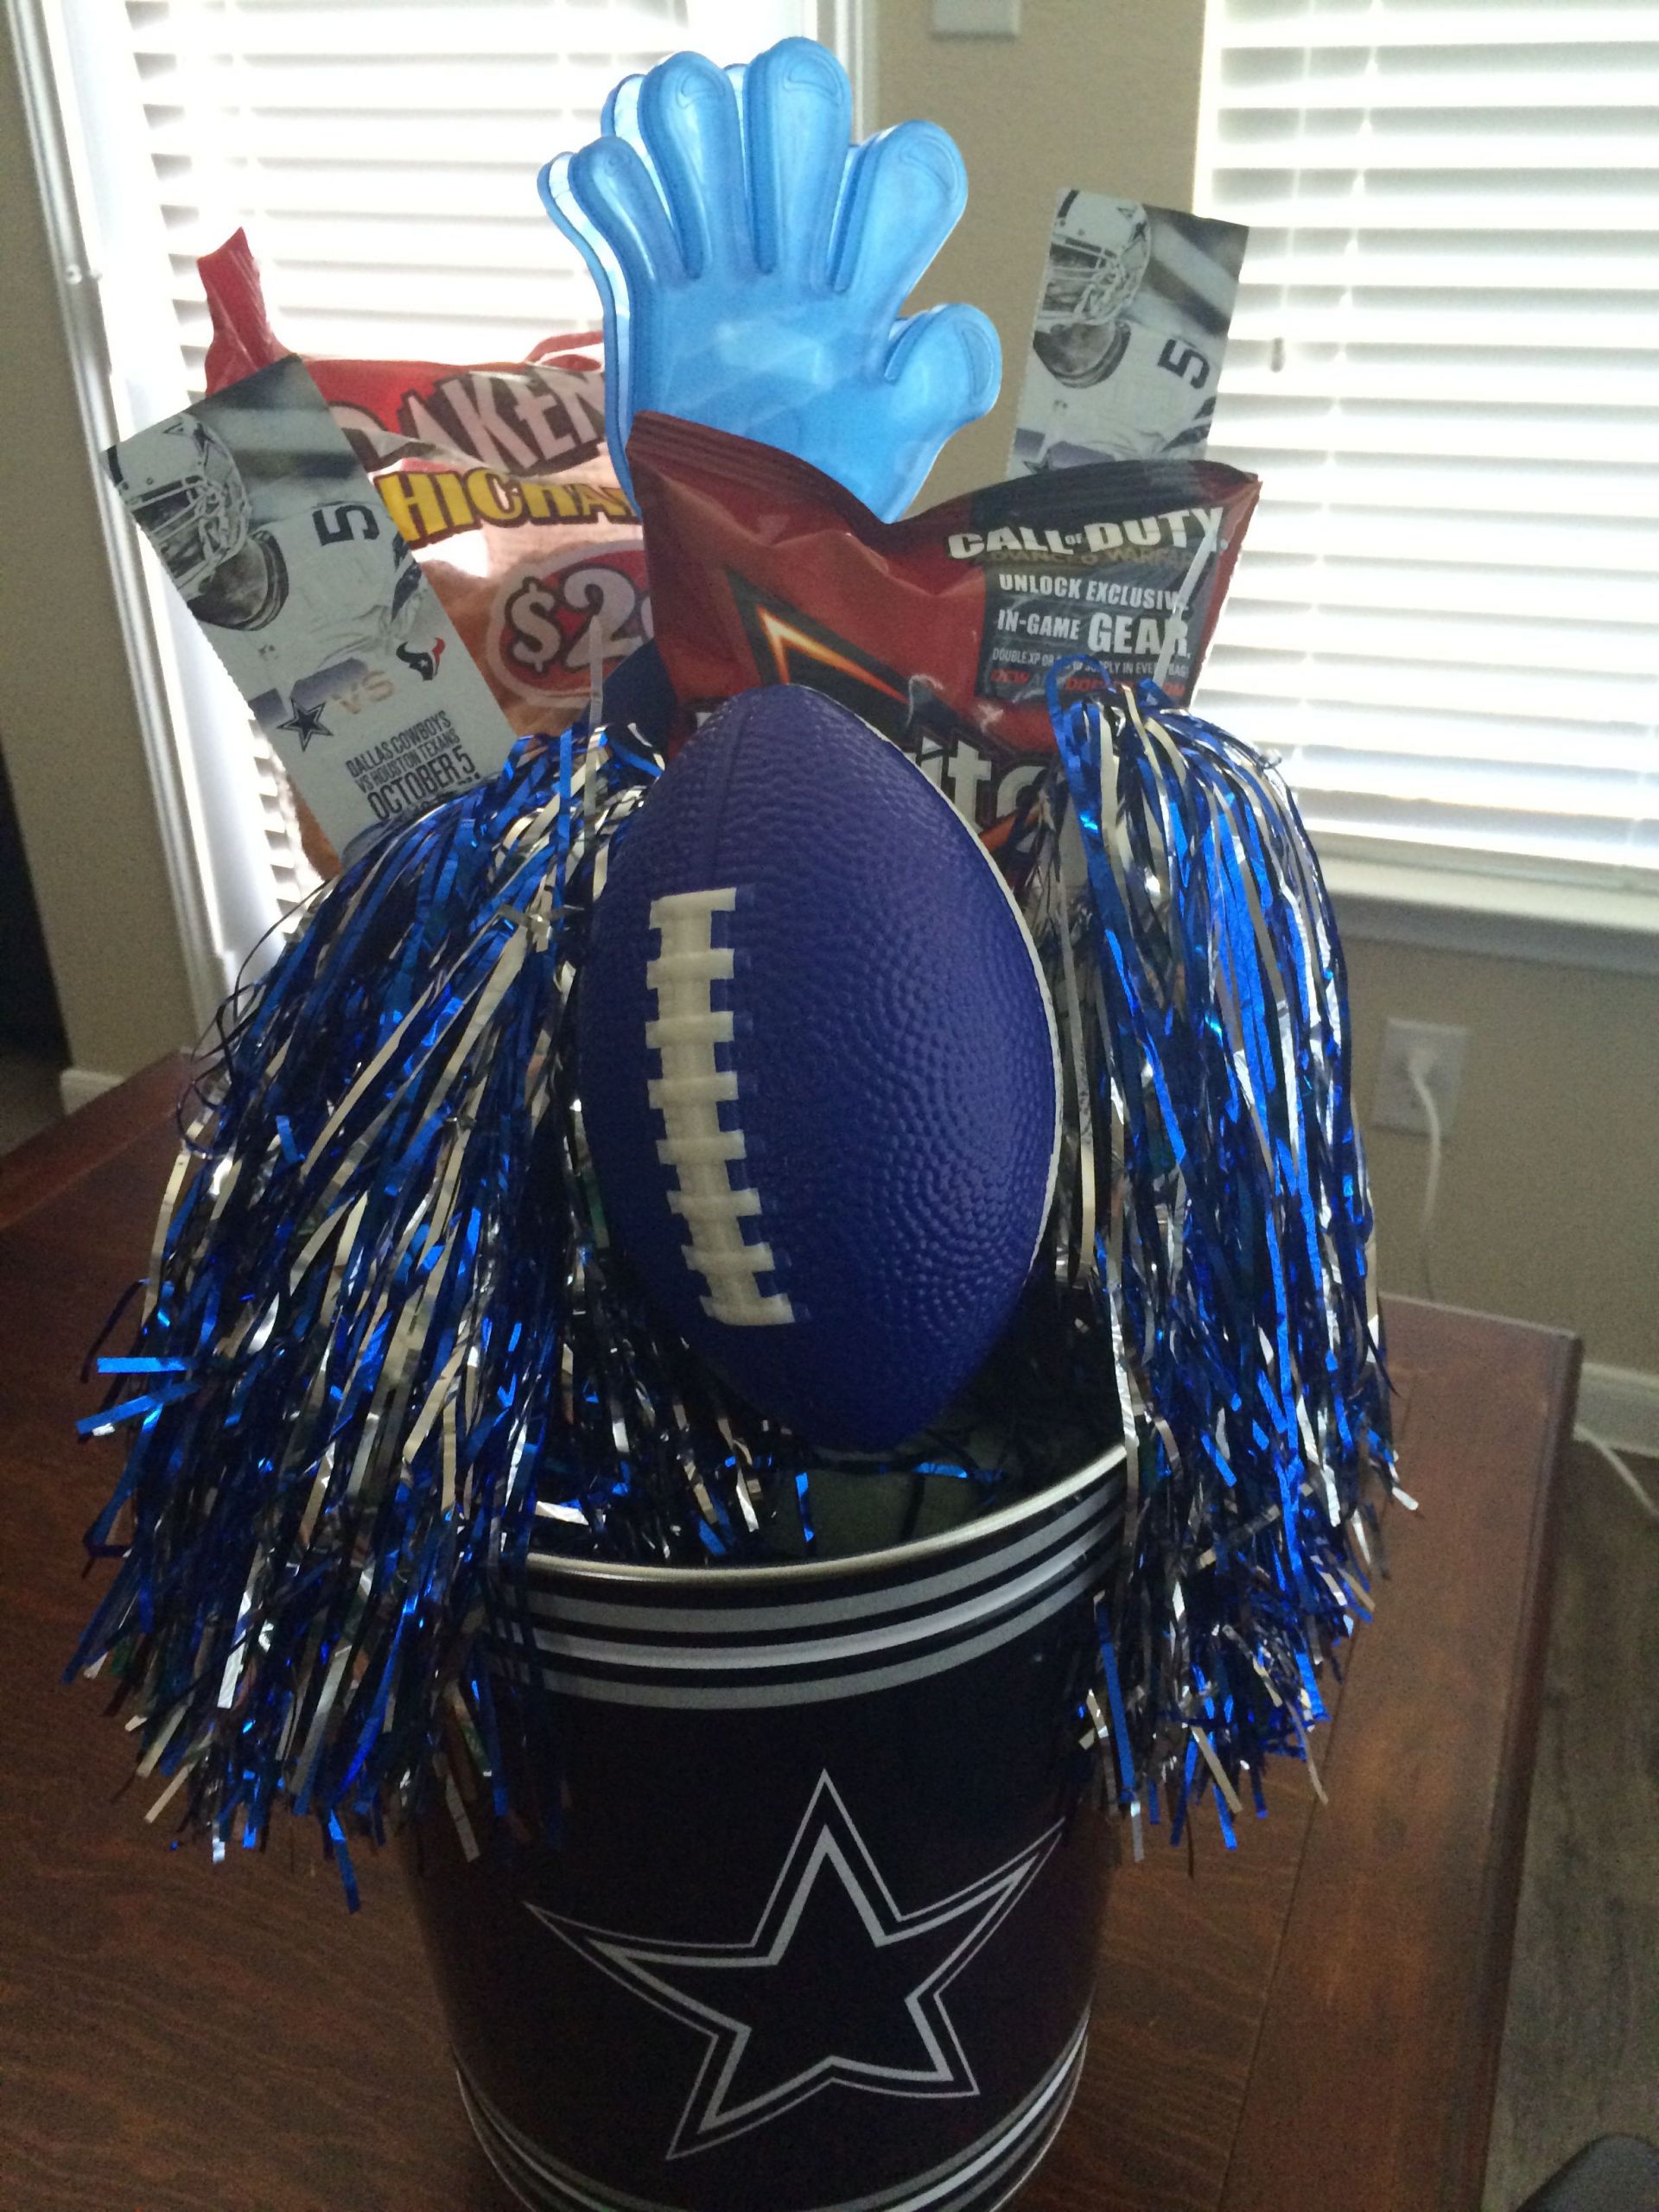 Dallas Cowboys Birthday Gift Ideas
 Dallas Cowboys Football Gift basket I made for my